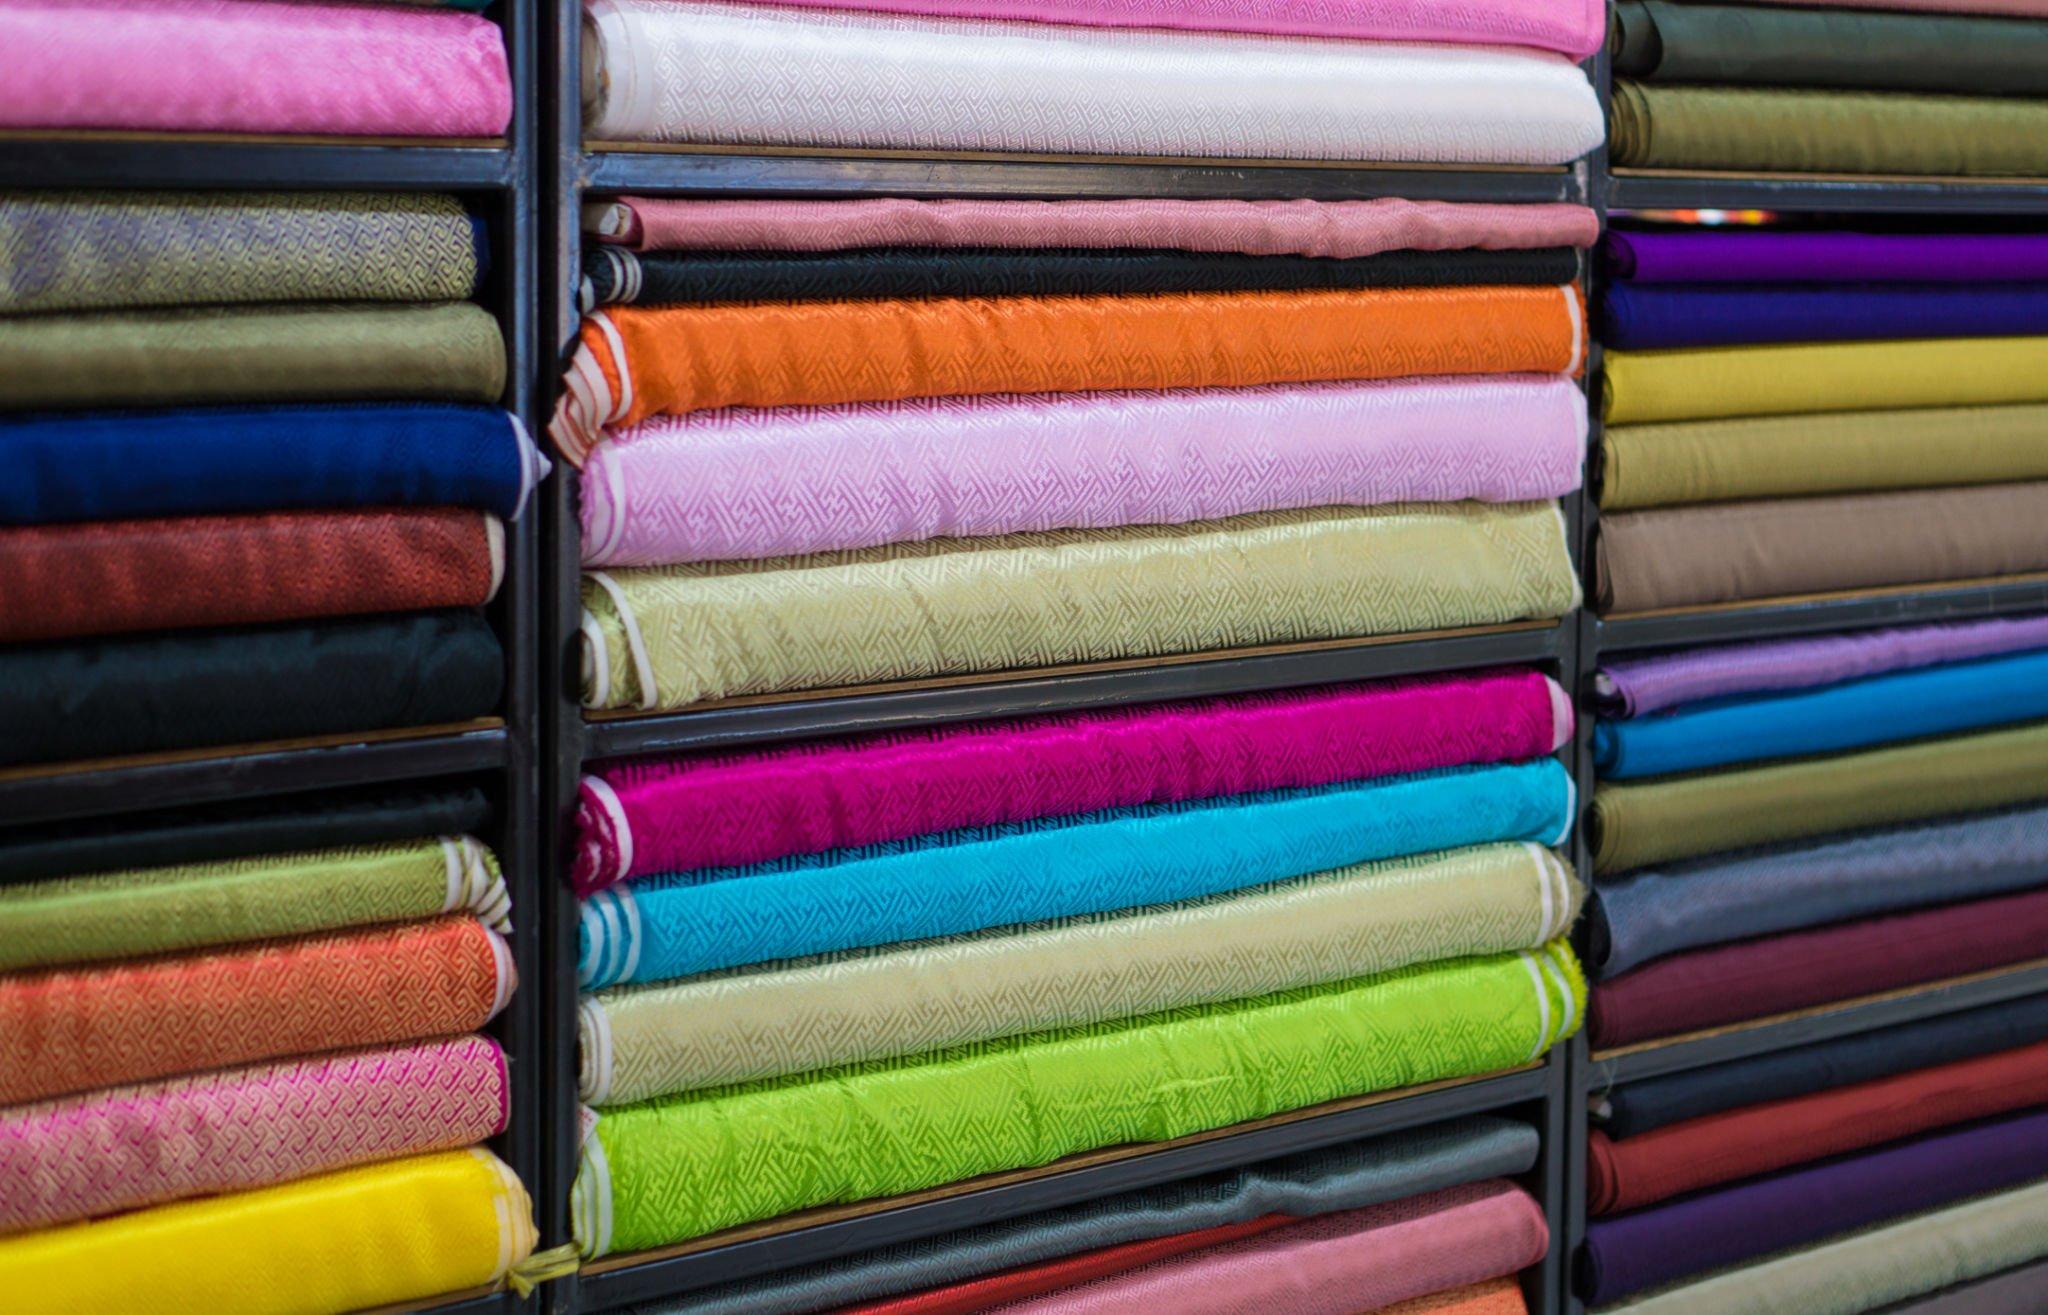 A list of best 10 Thin Lightweight fabrics for dressmaking - SewGuide